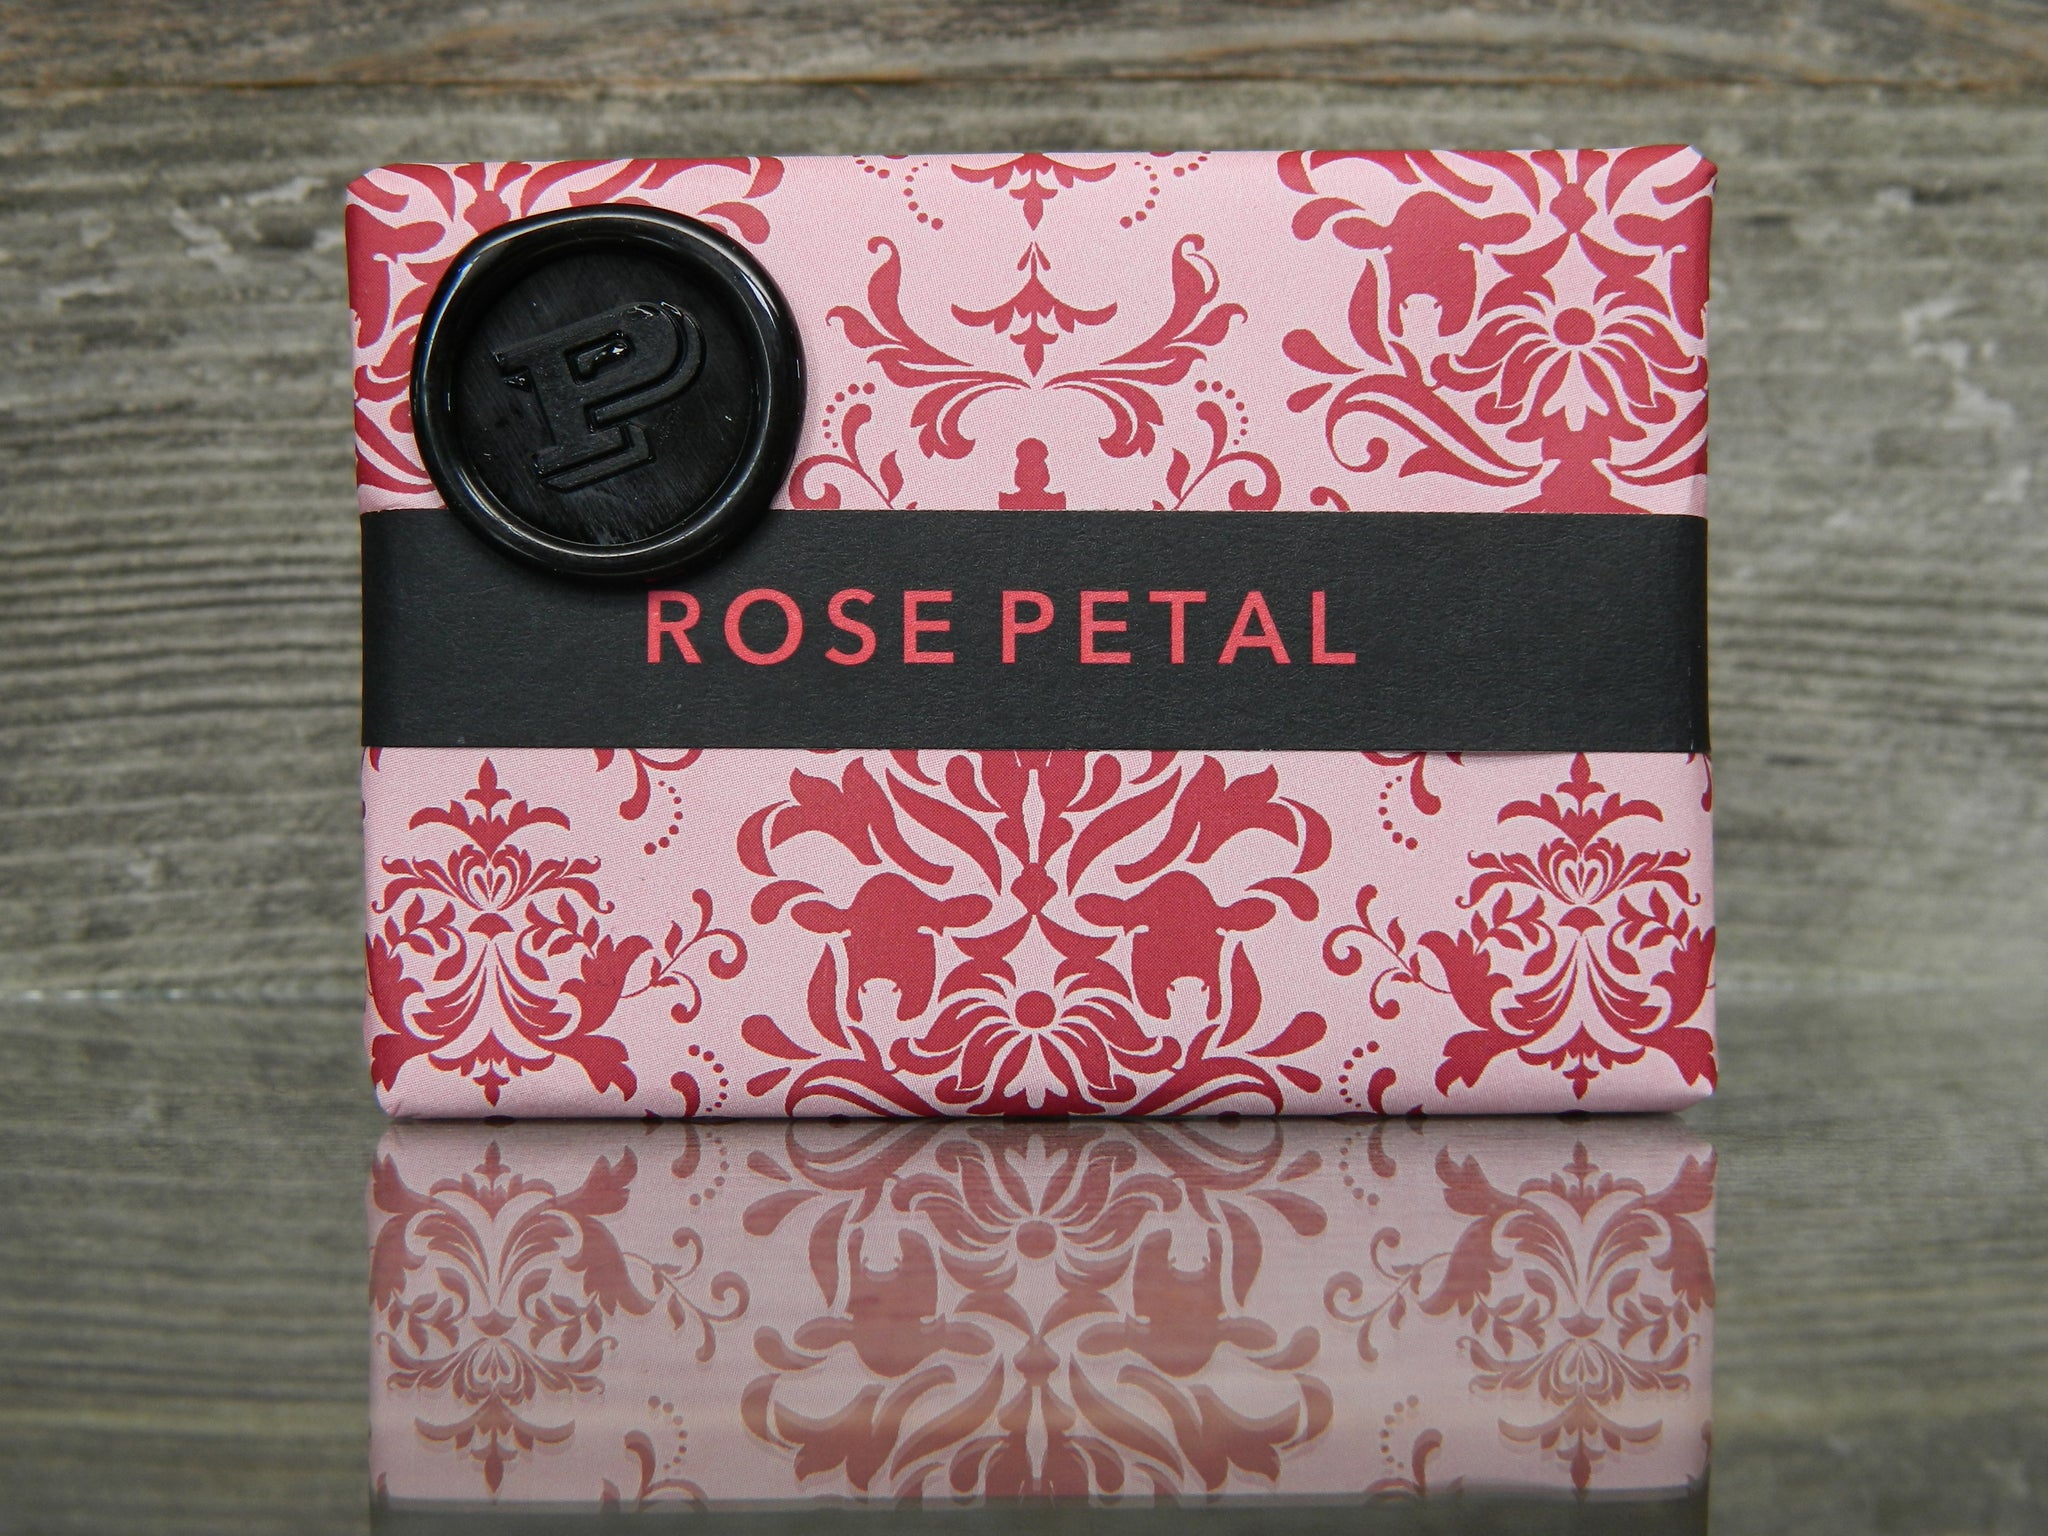 Rose Petal Soap